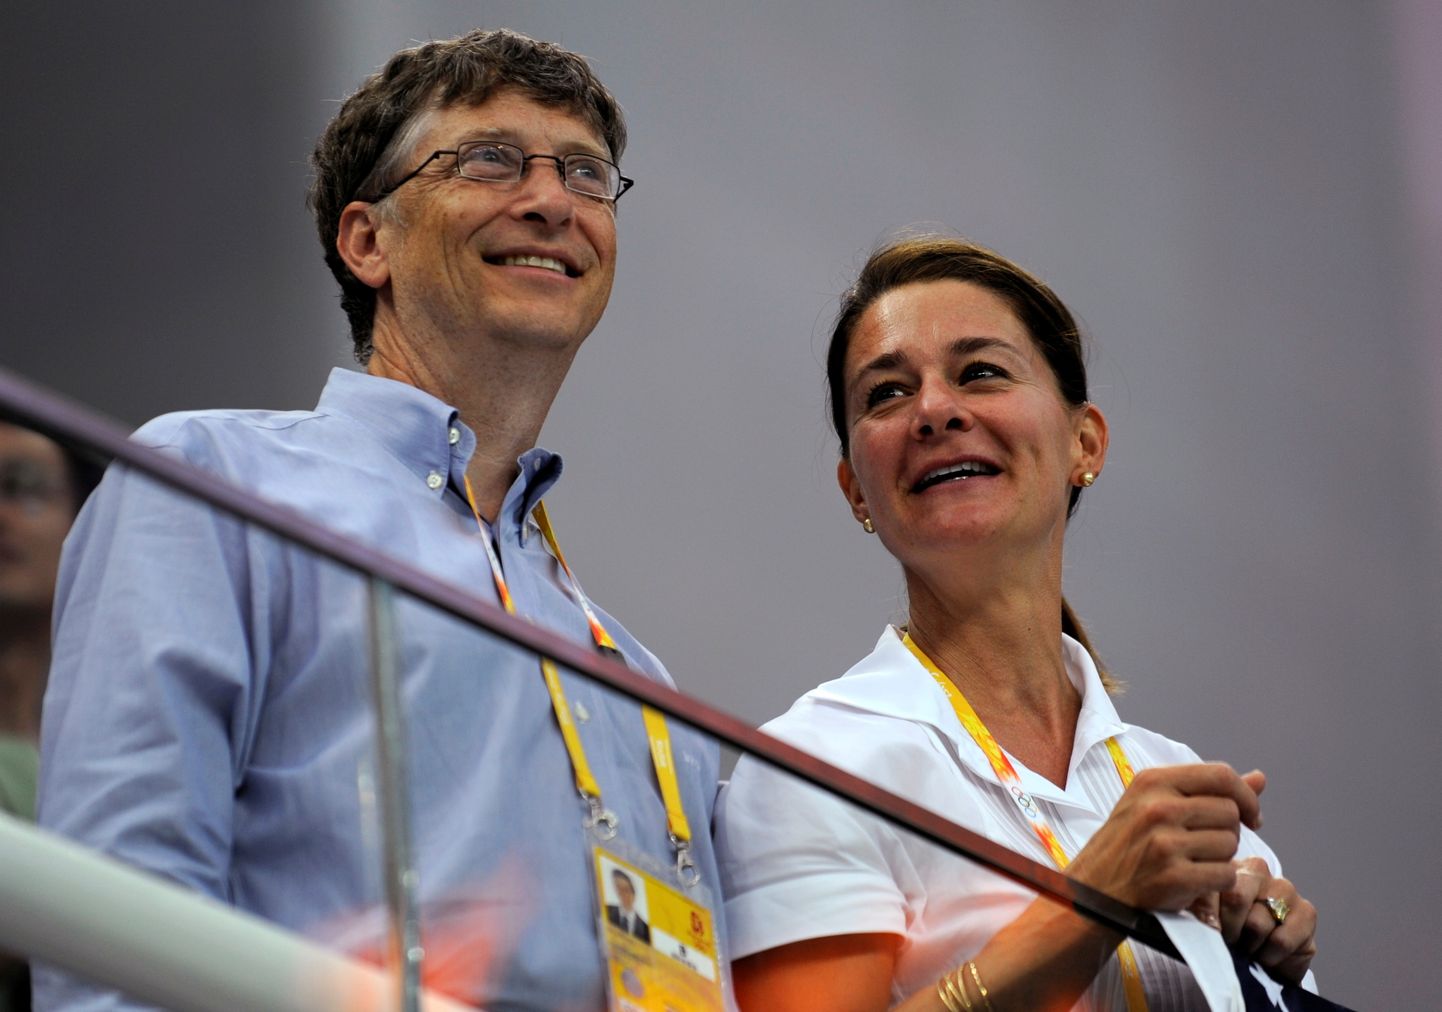 Билл и Мелинда Гейтс объявили о разводе после 27 лет брака.